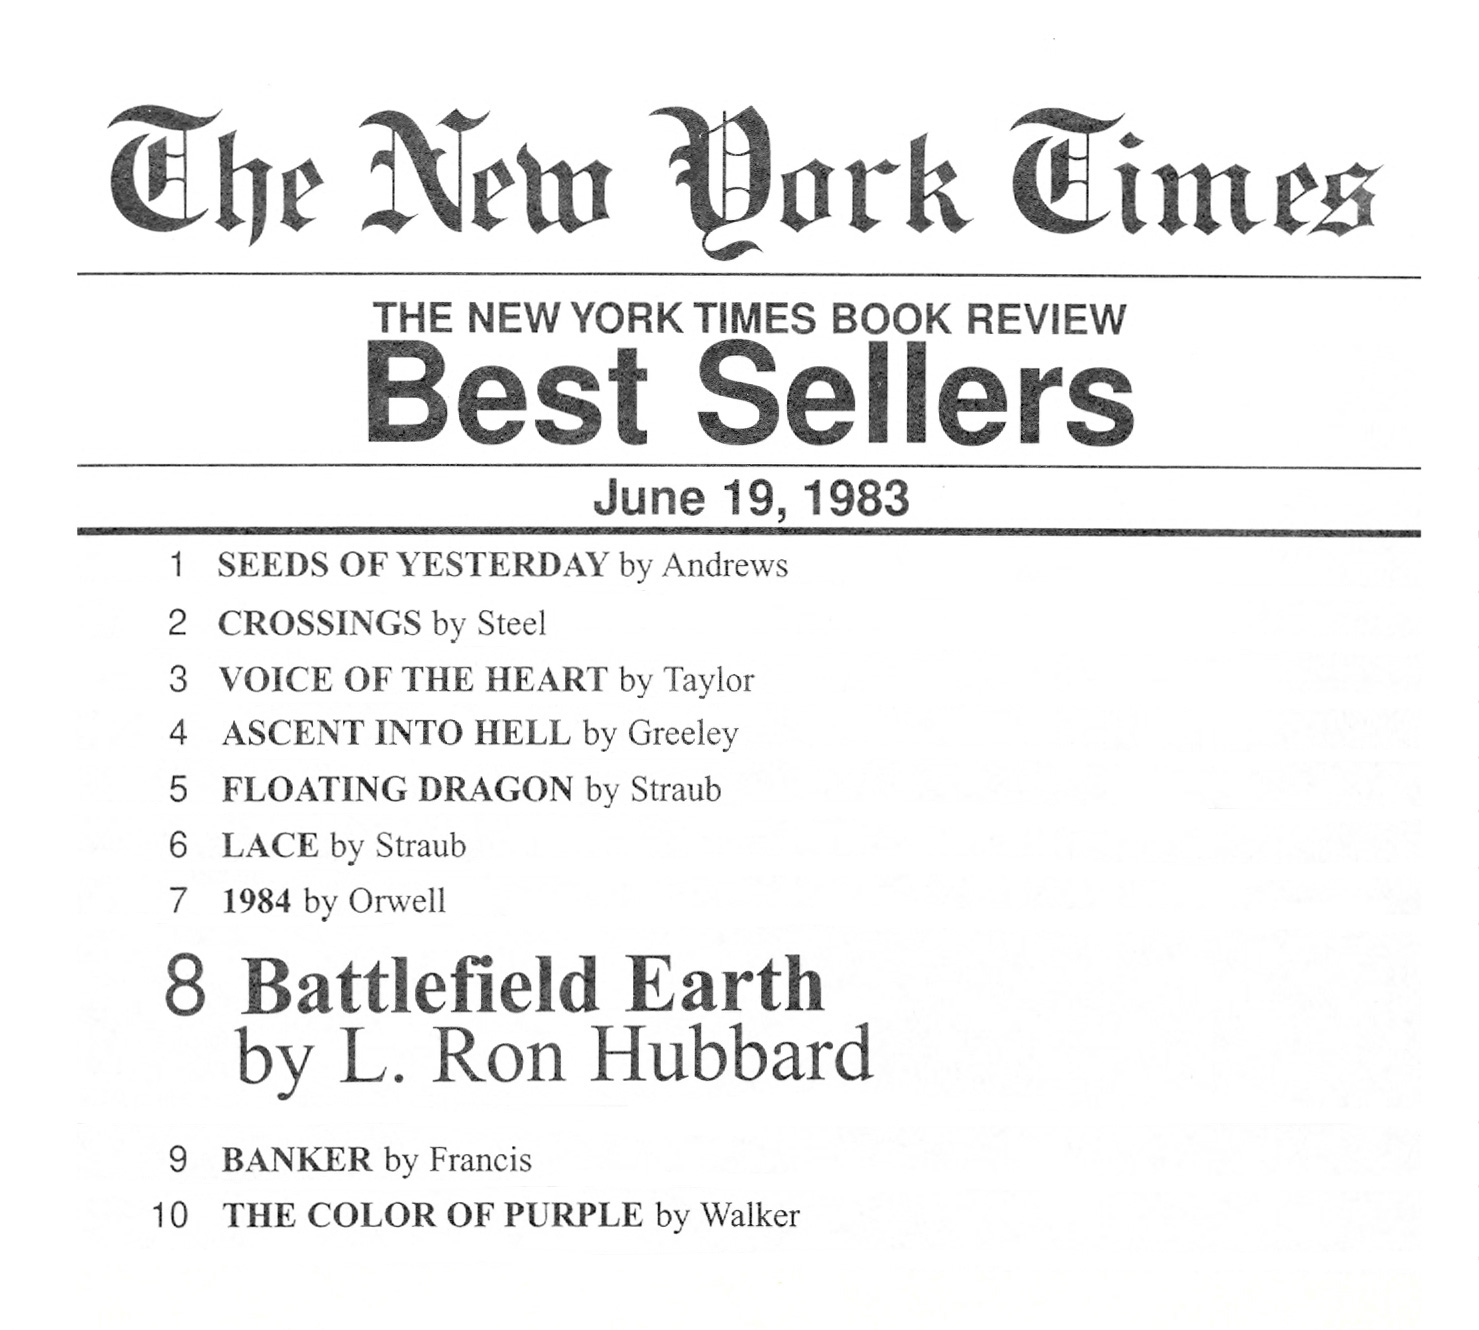 New York Times Best Sellers - Battlefield Earth #8